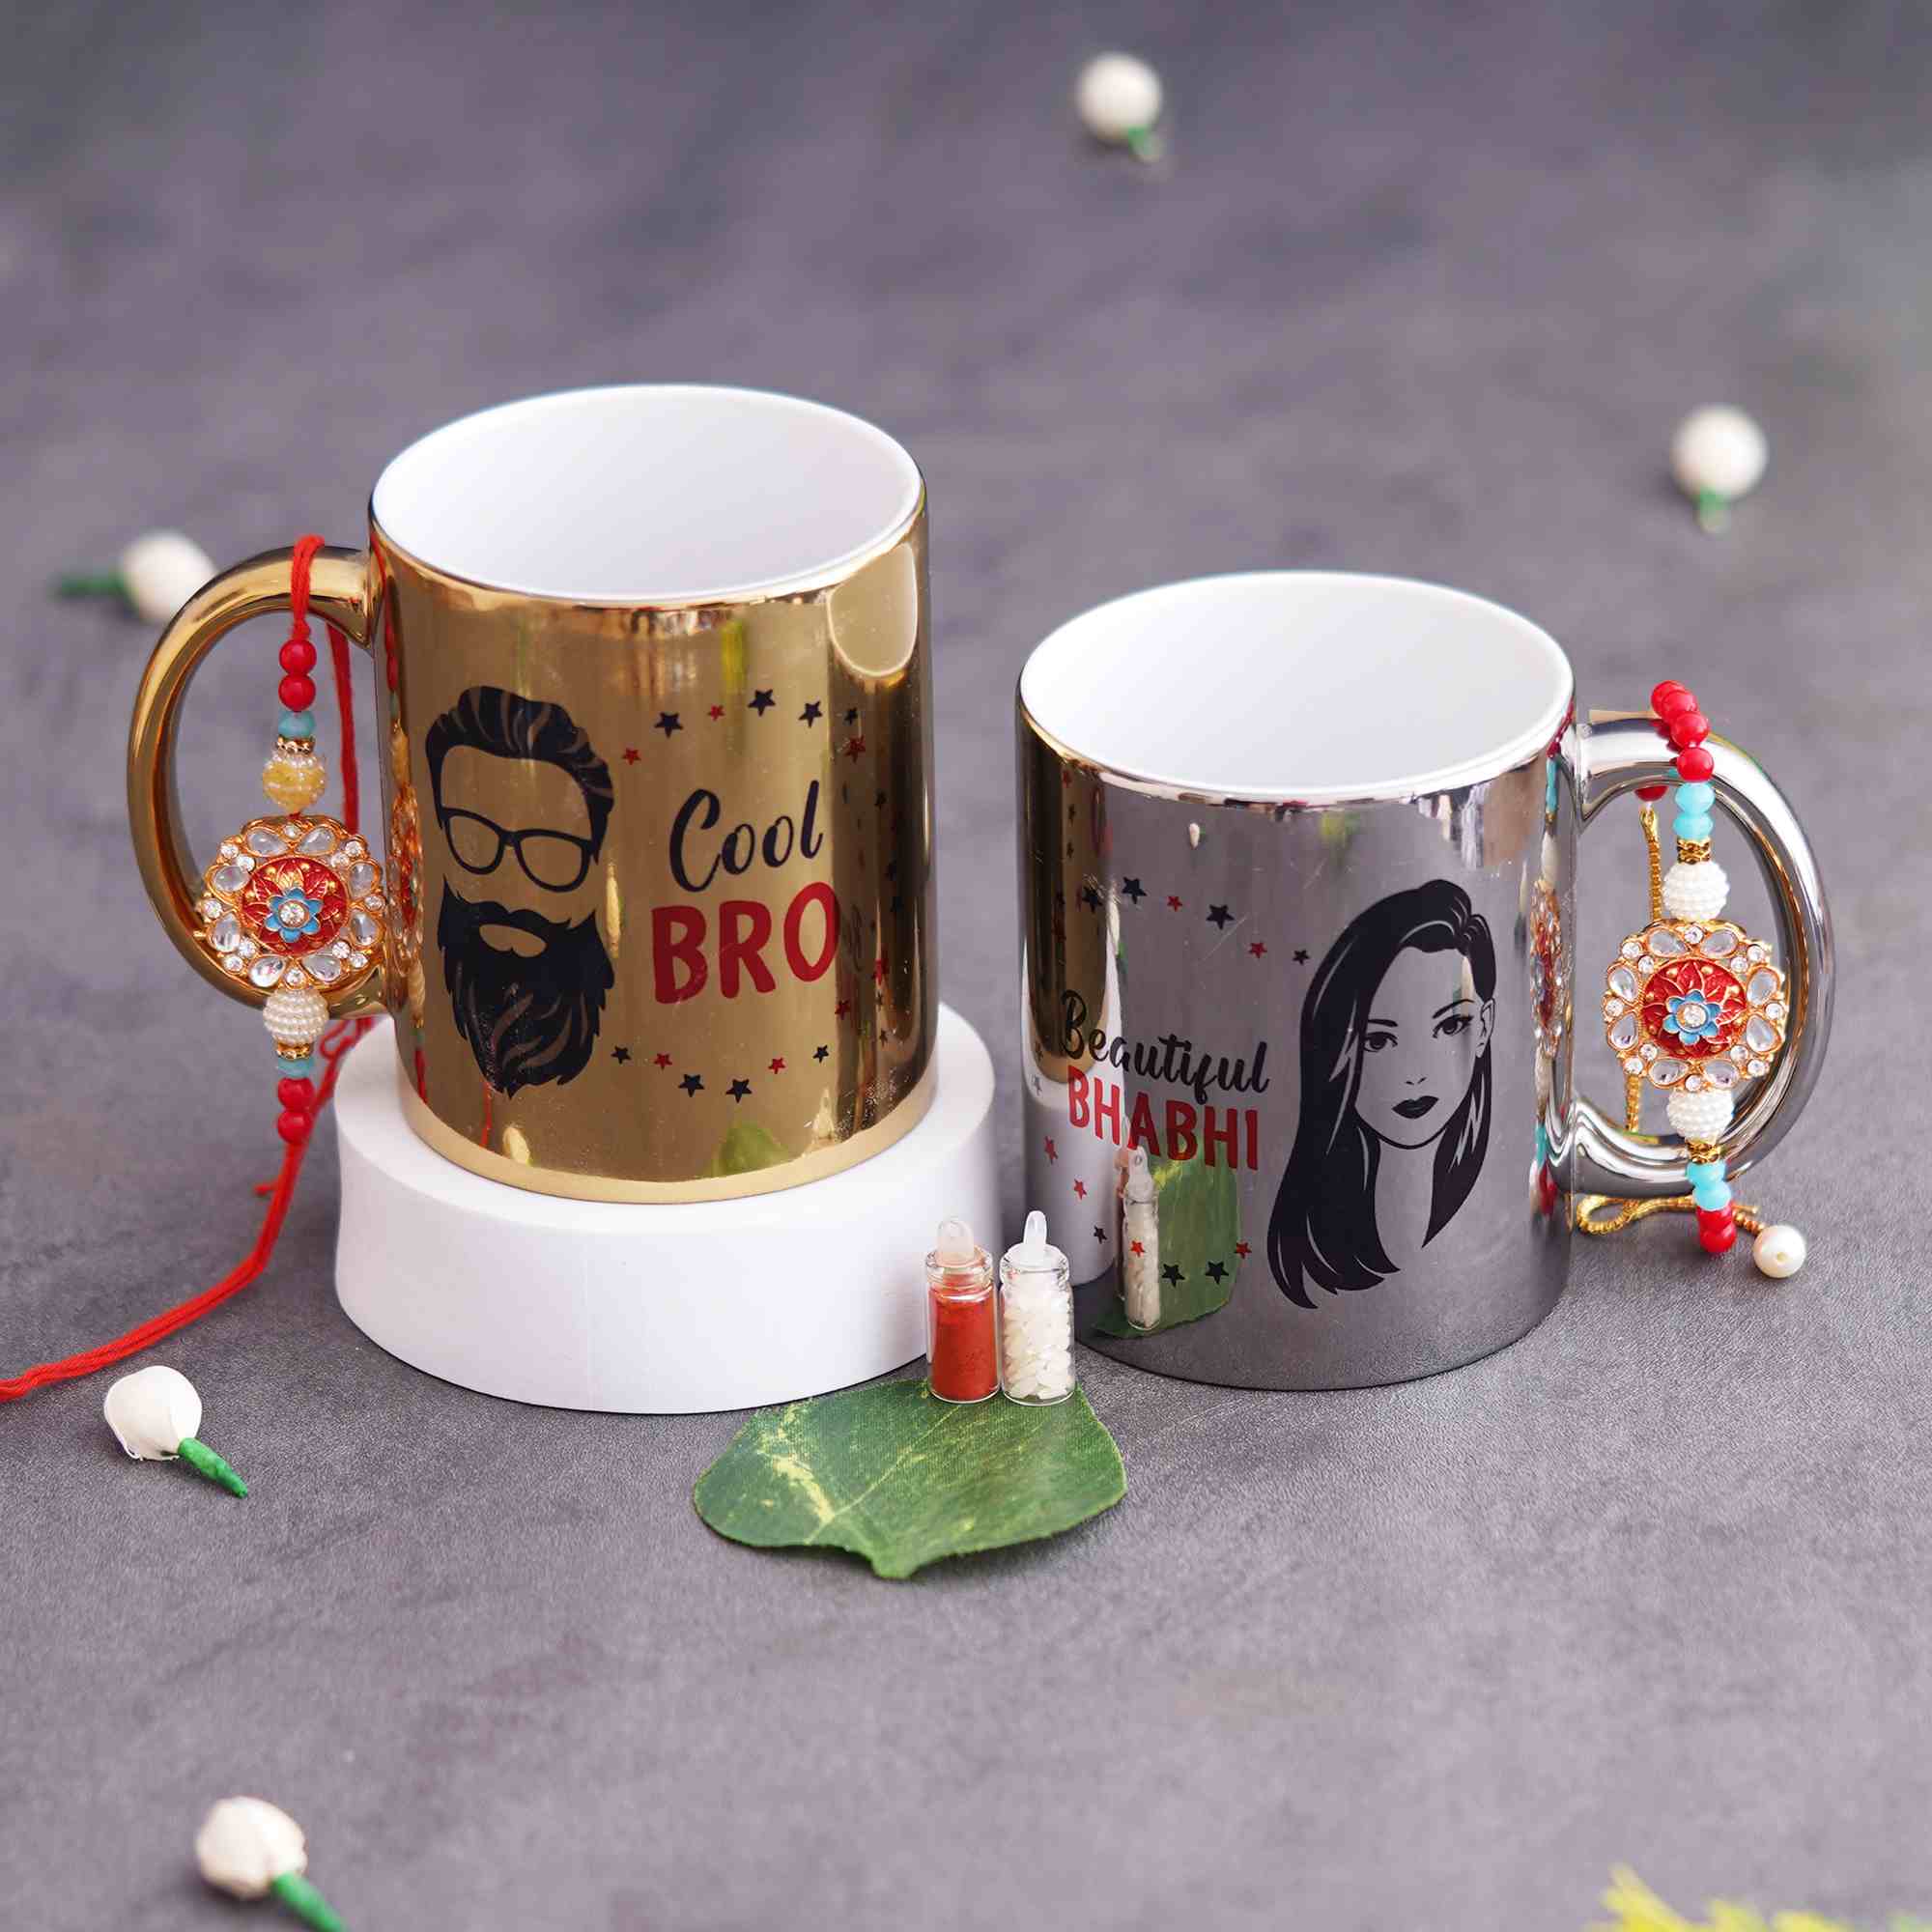 rakhi gift for bhabhi: 5 Thoughtful Rakhi Gifts for Bhabhi That She'll Love  - The Economic Times